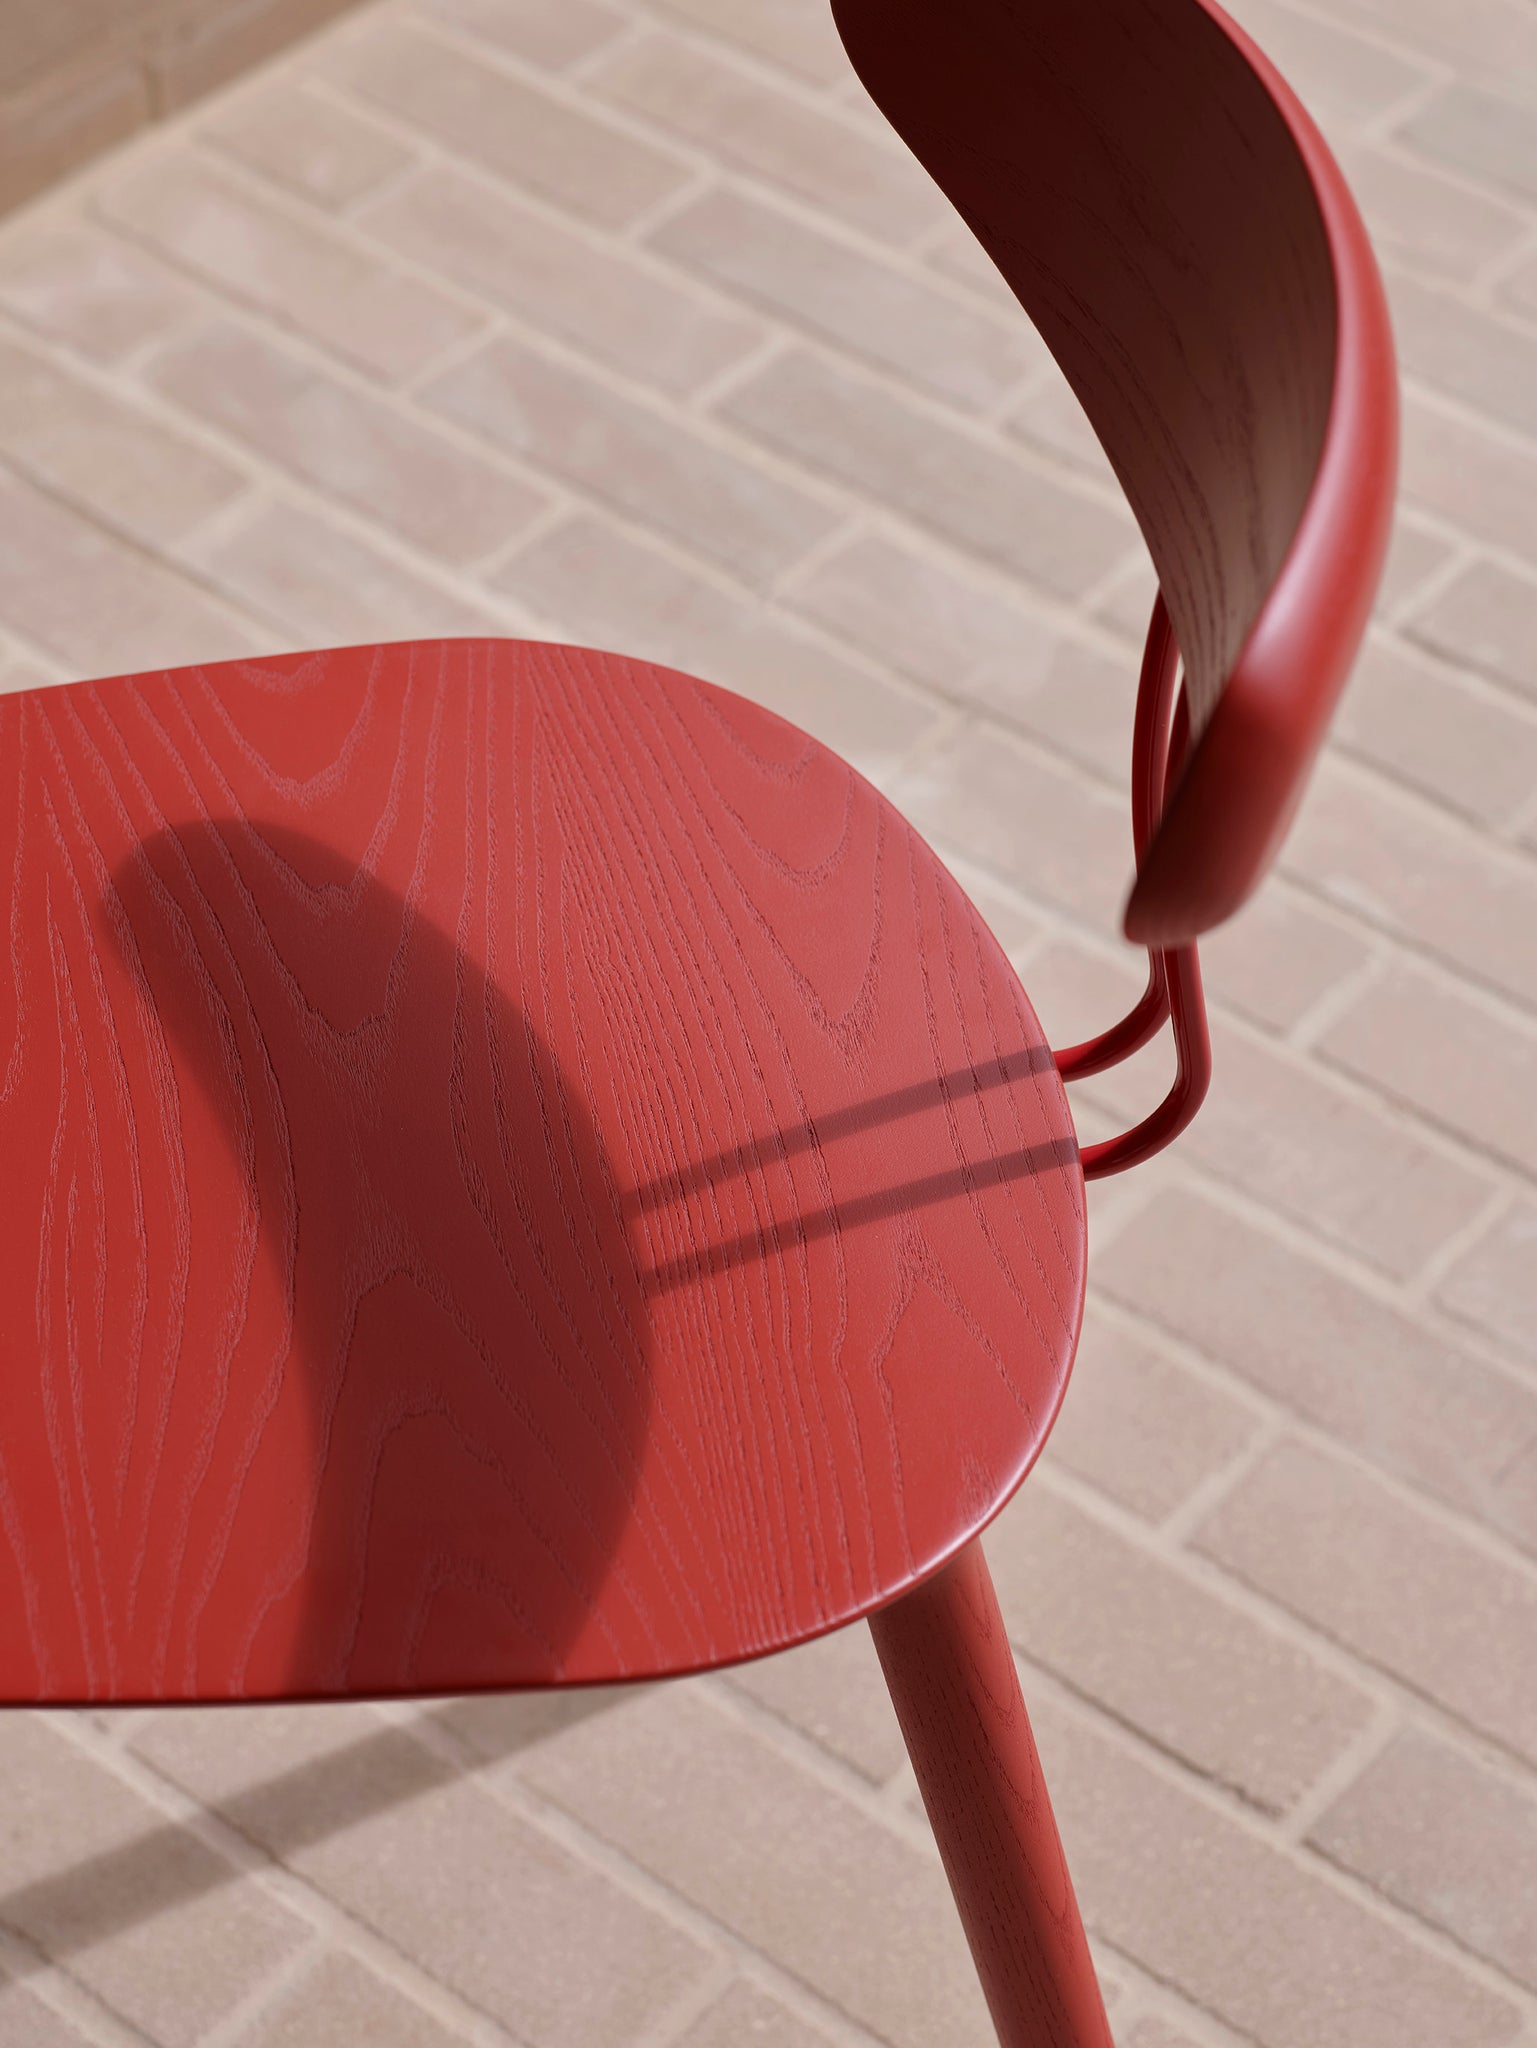 Mast Furniture Stem chair in red